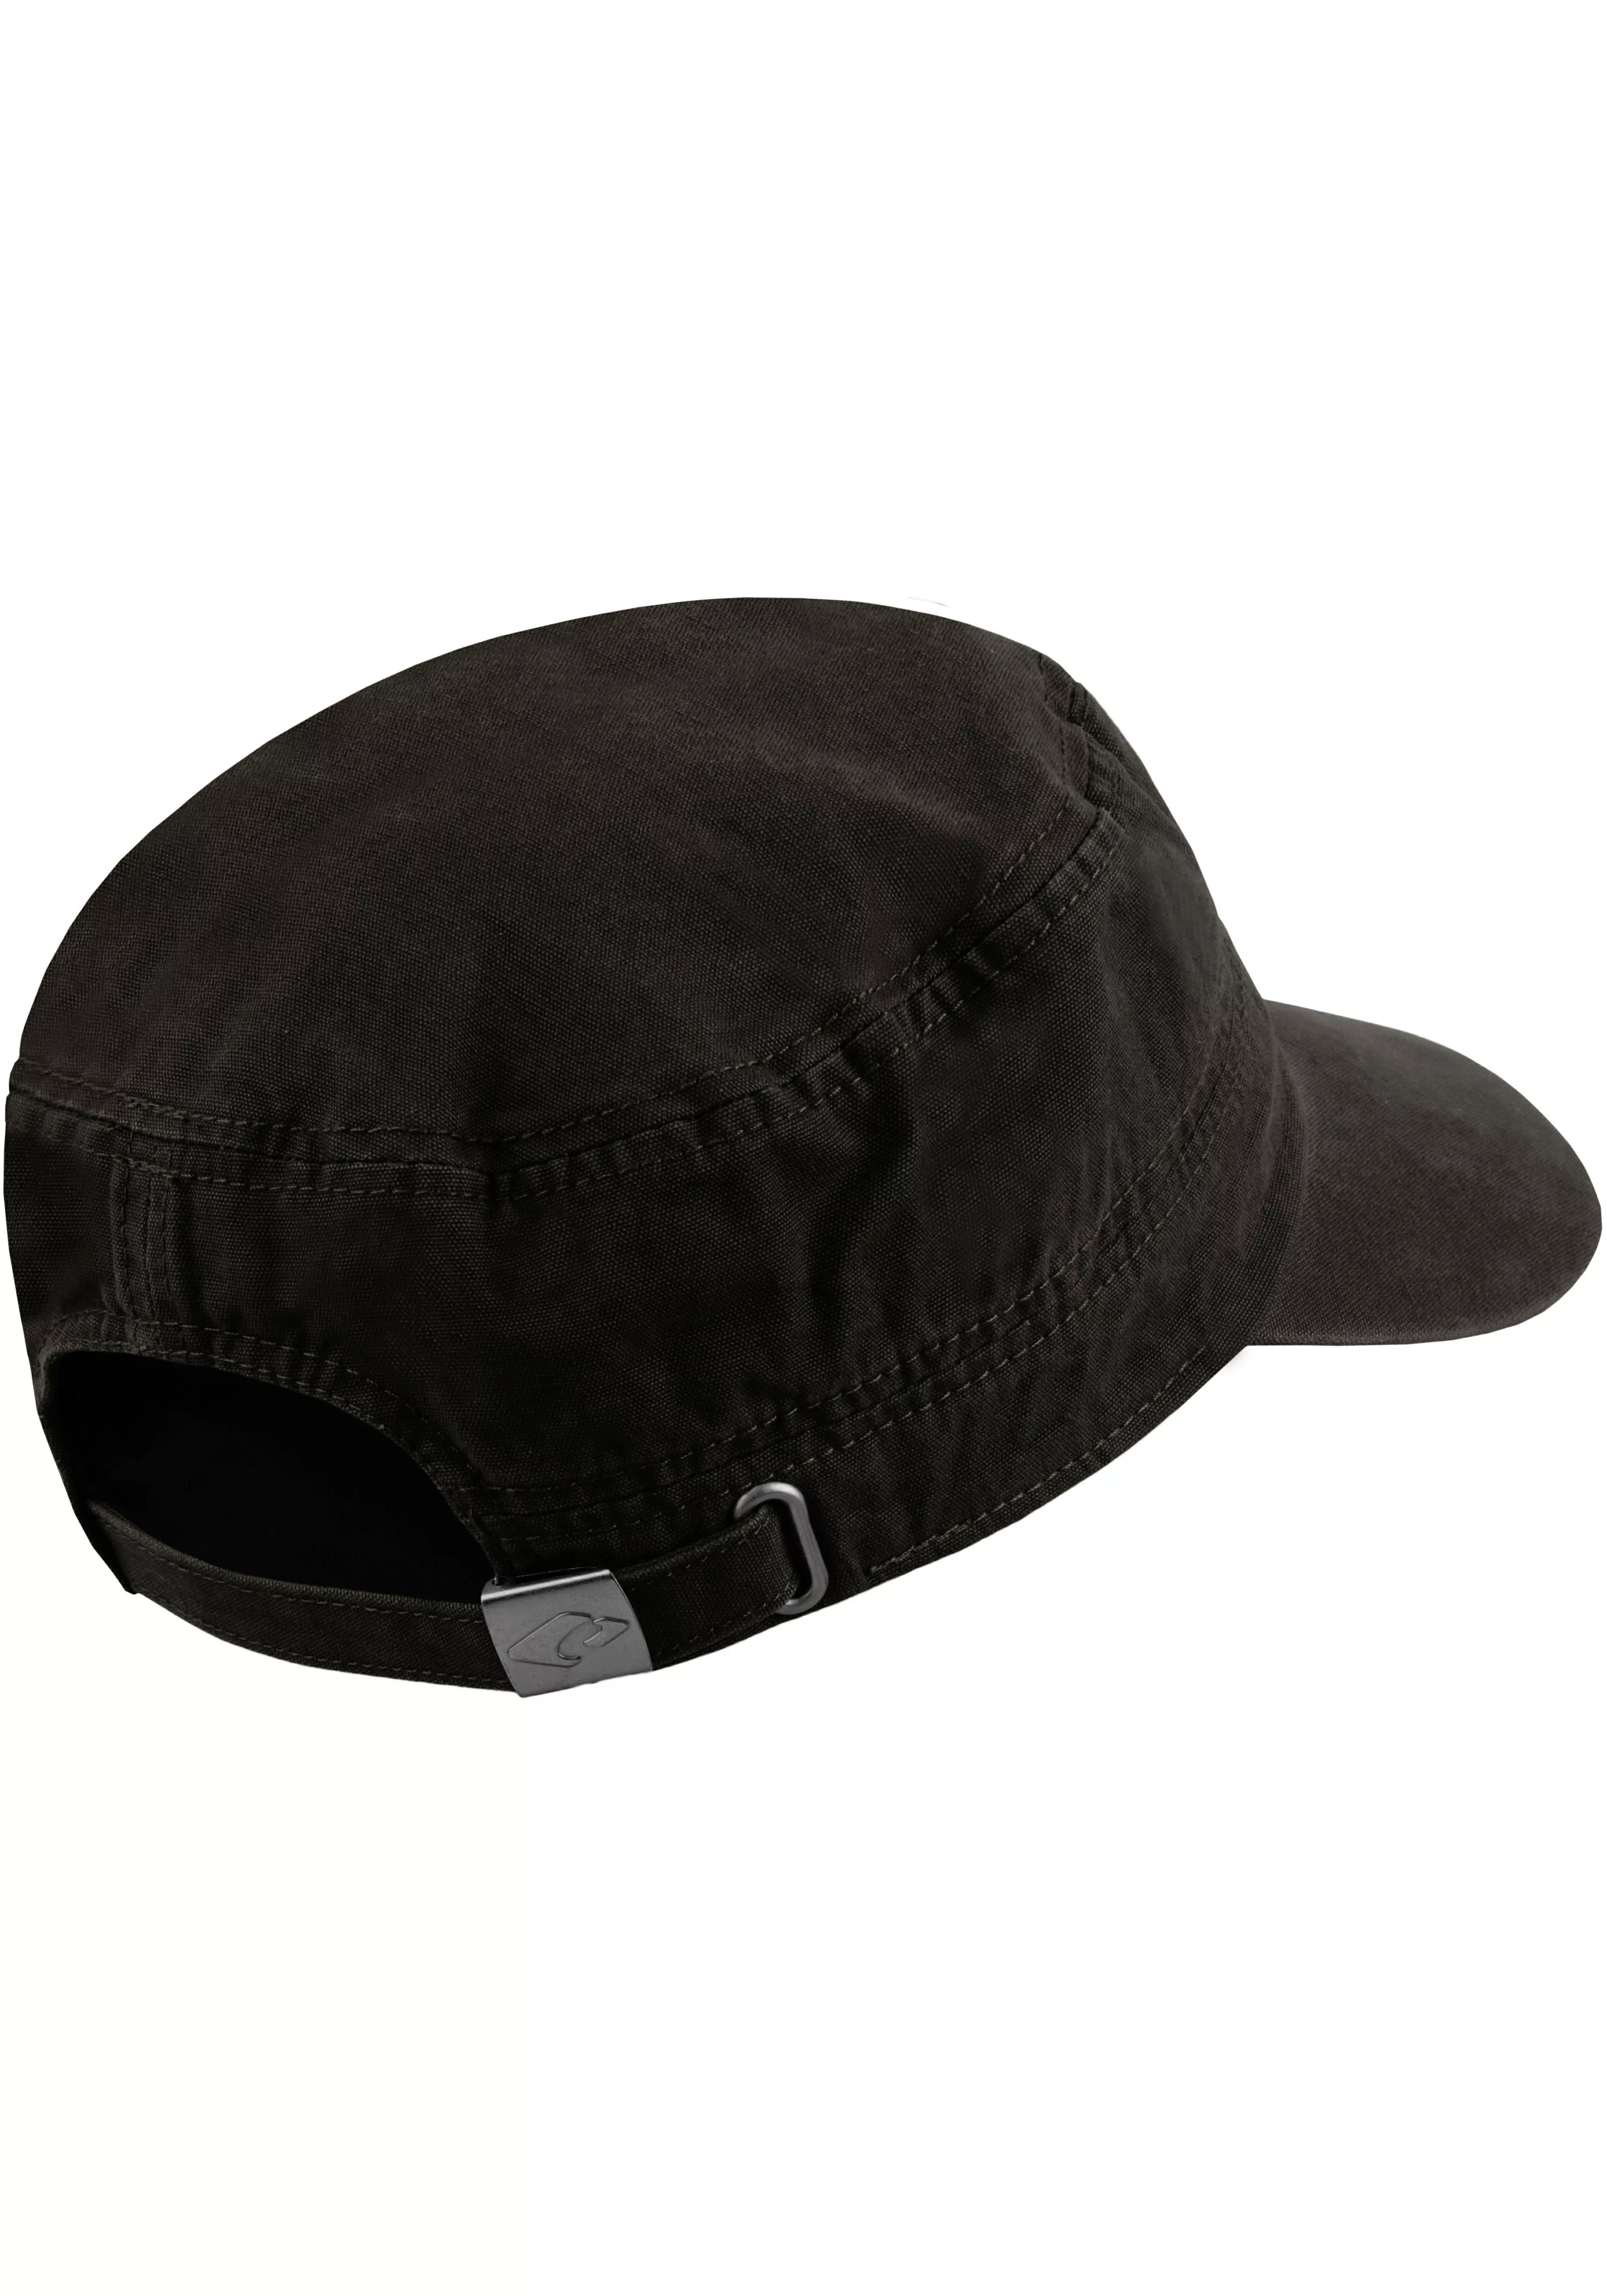 chillouts Army Cap "Dublin Hat", Cap im Mililtary-Style günstig online kaufen